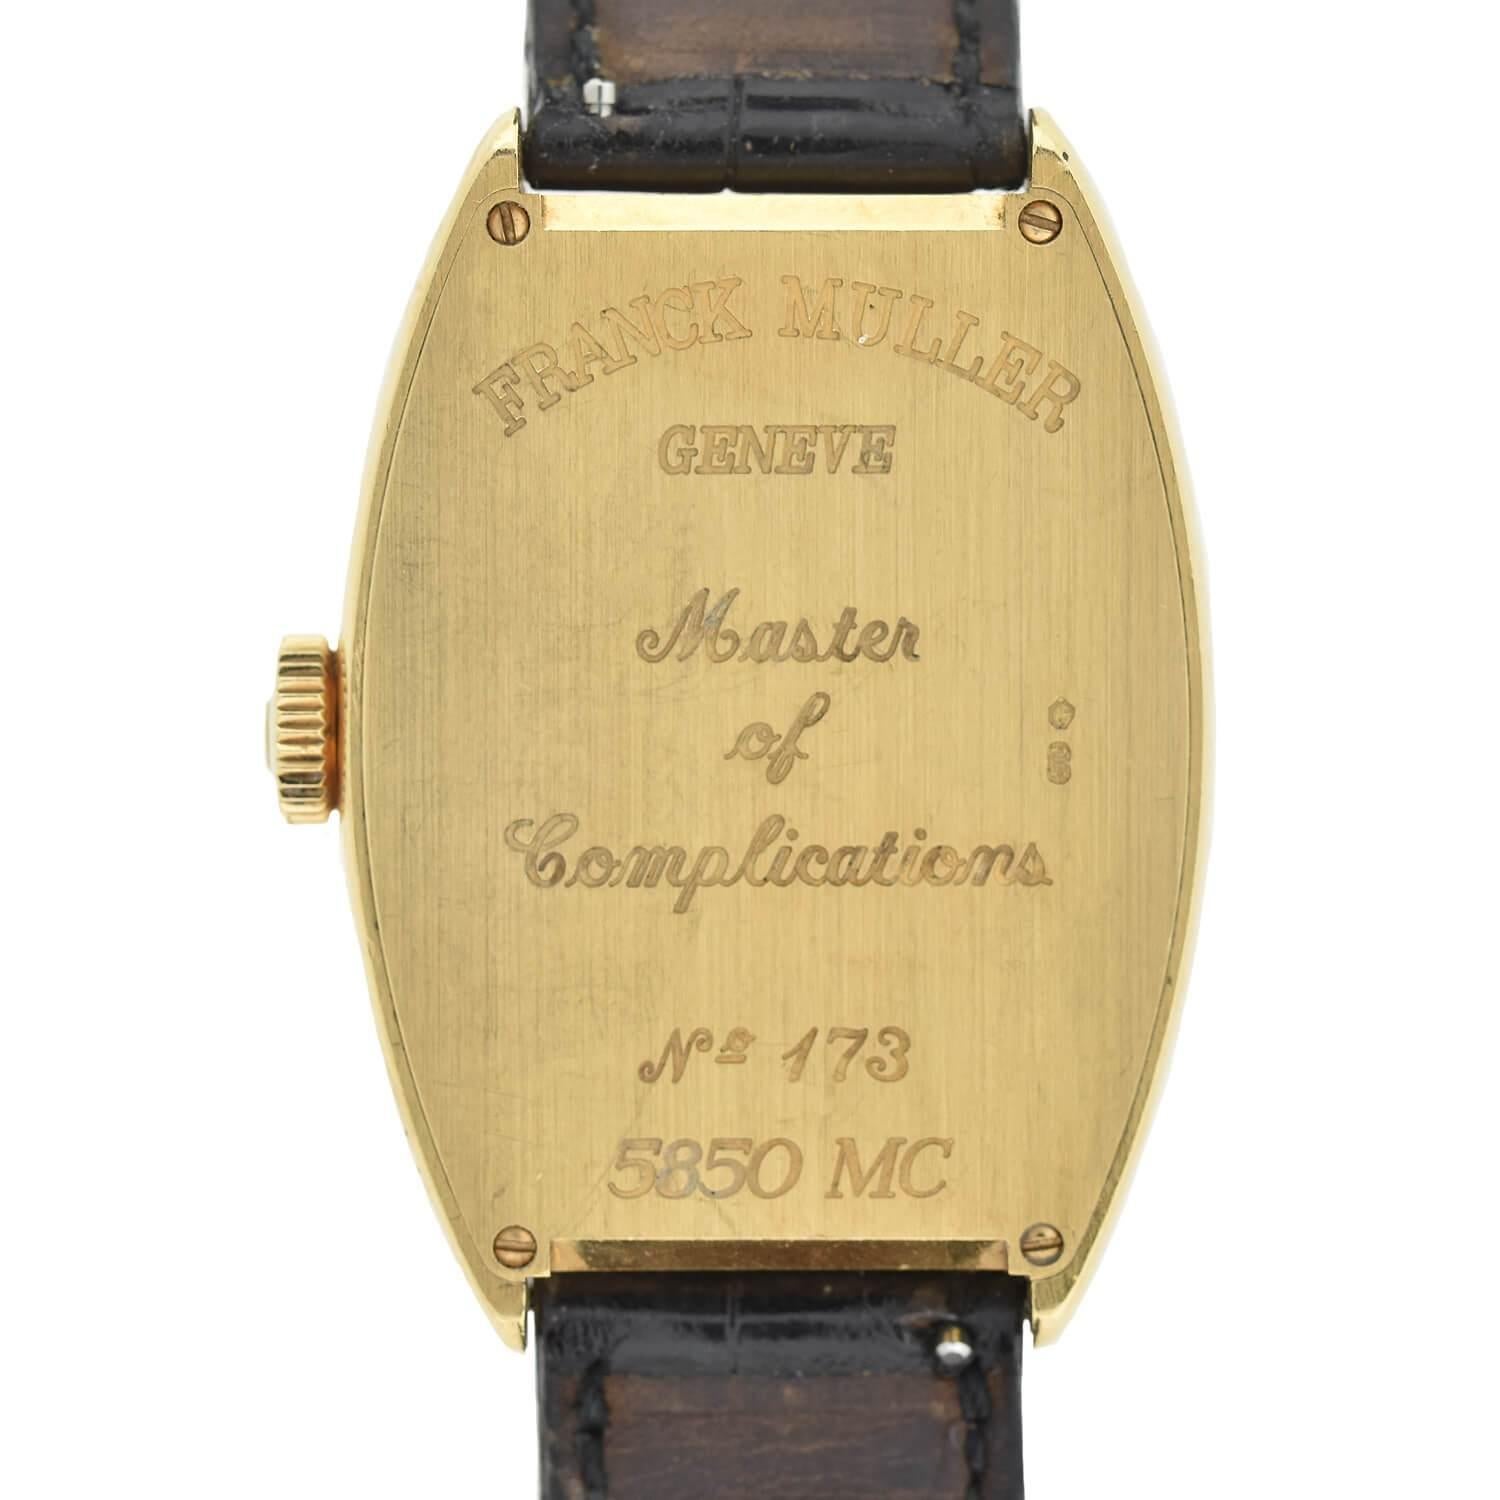 Contemporary Franck Muller 18kt Master Calendar 5850 Mc Watch For Sale